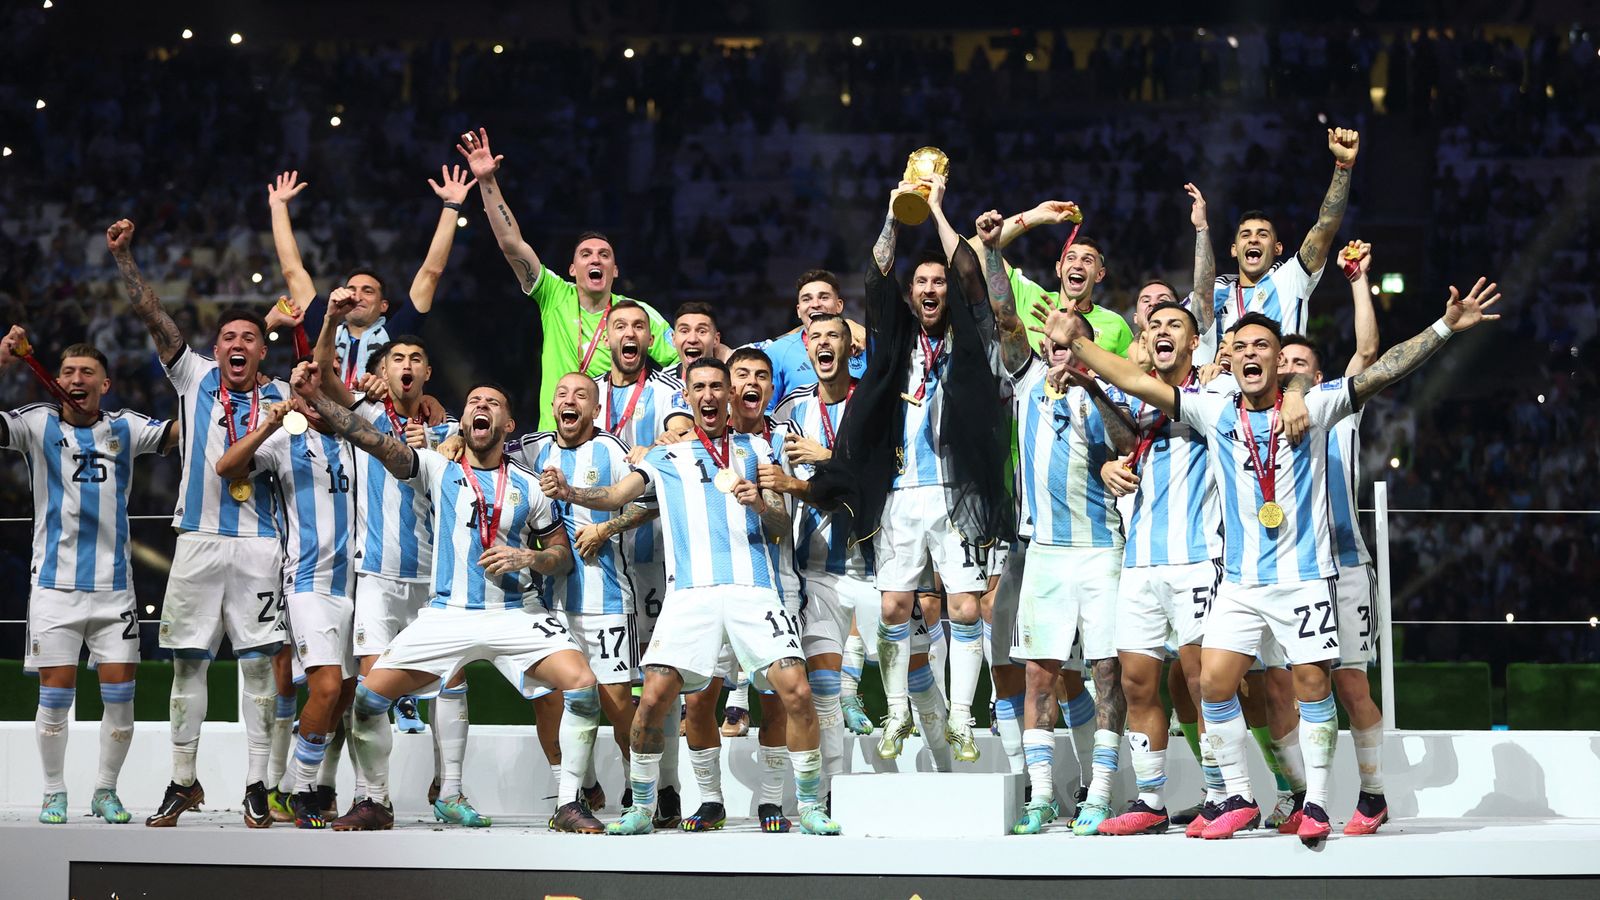 Cuantos mundiales ganó argentina